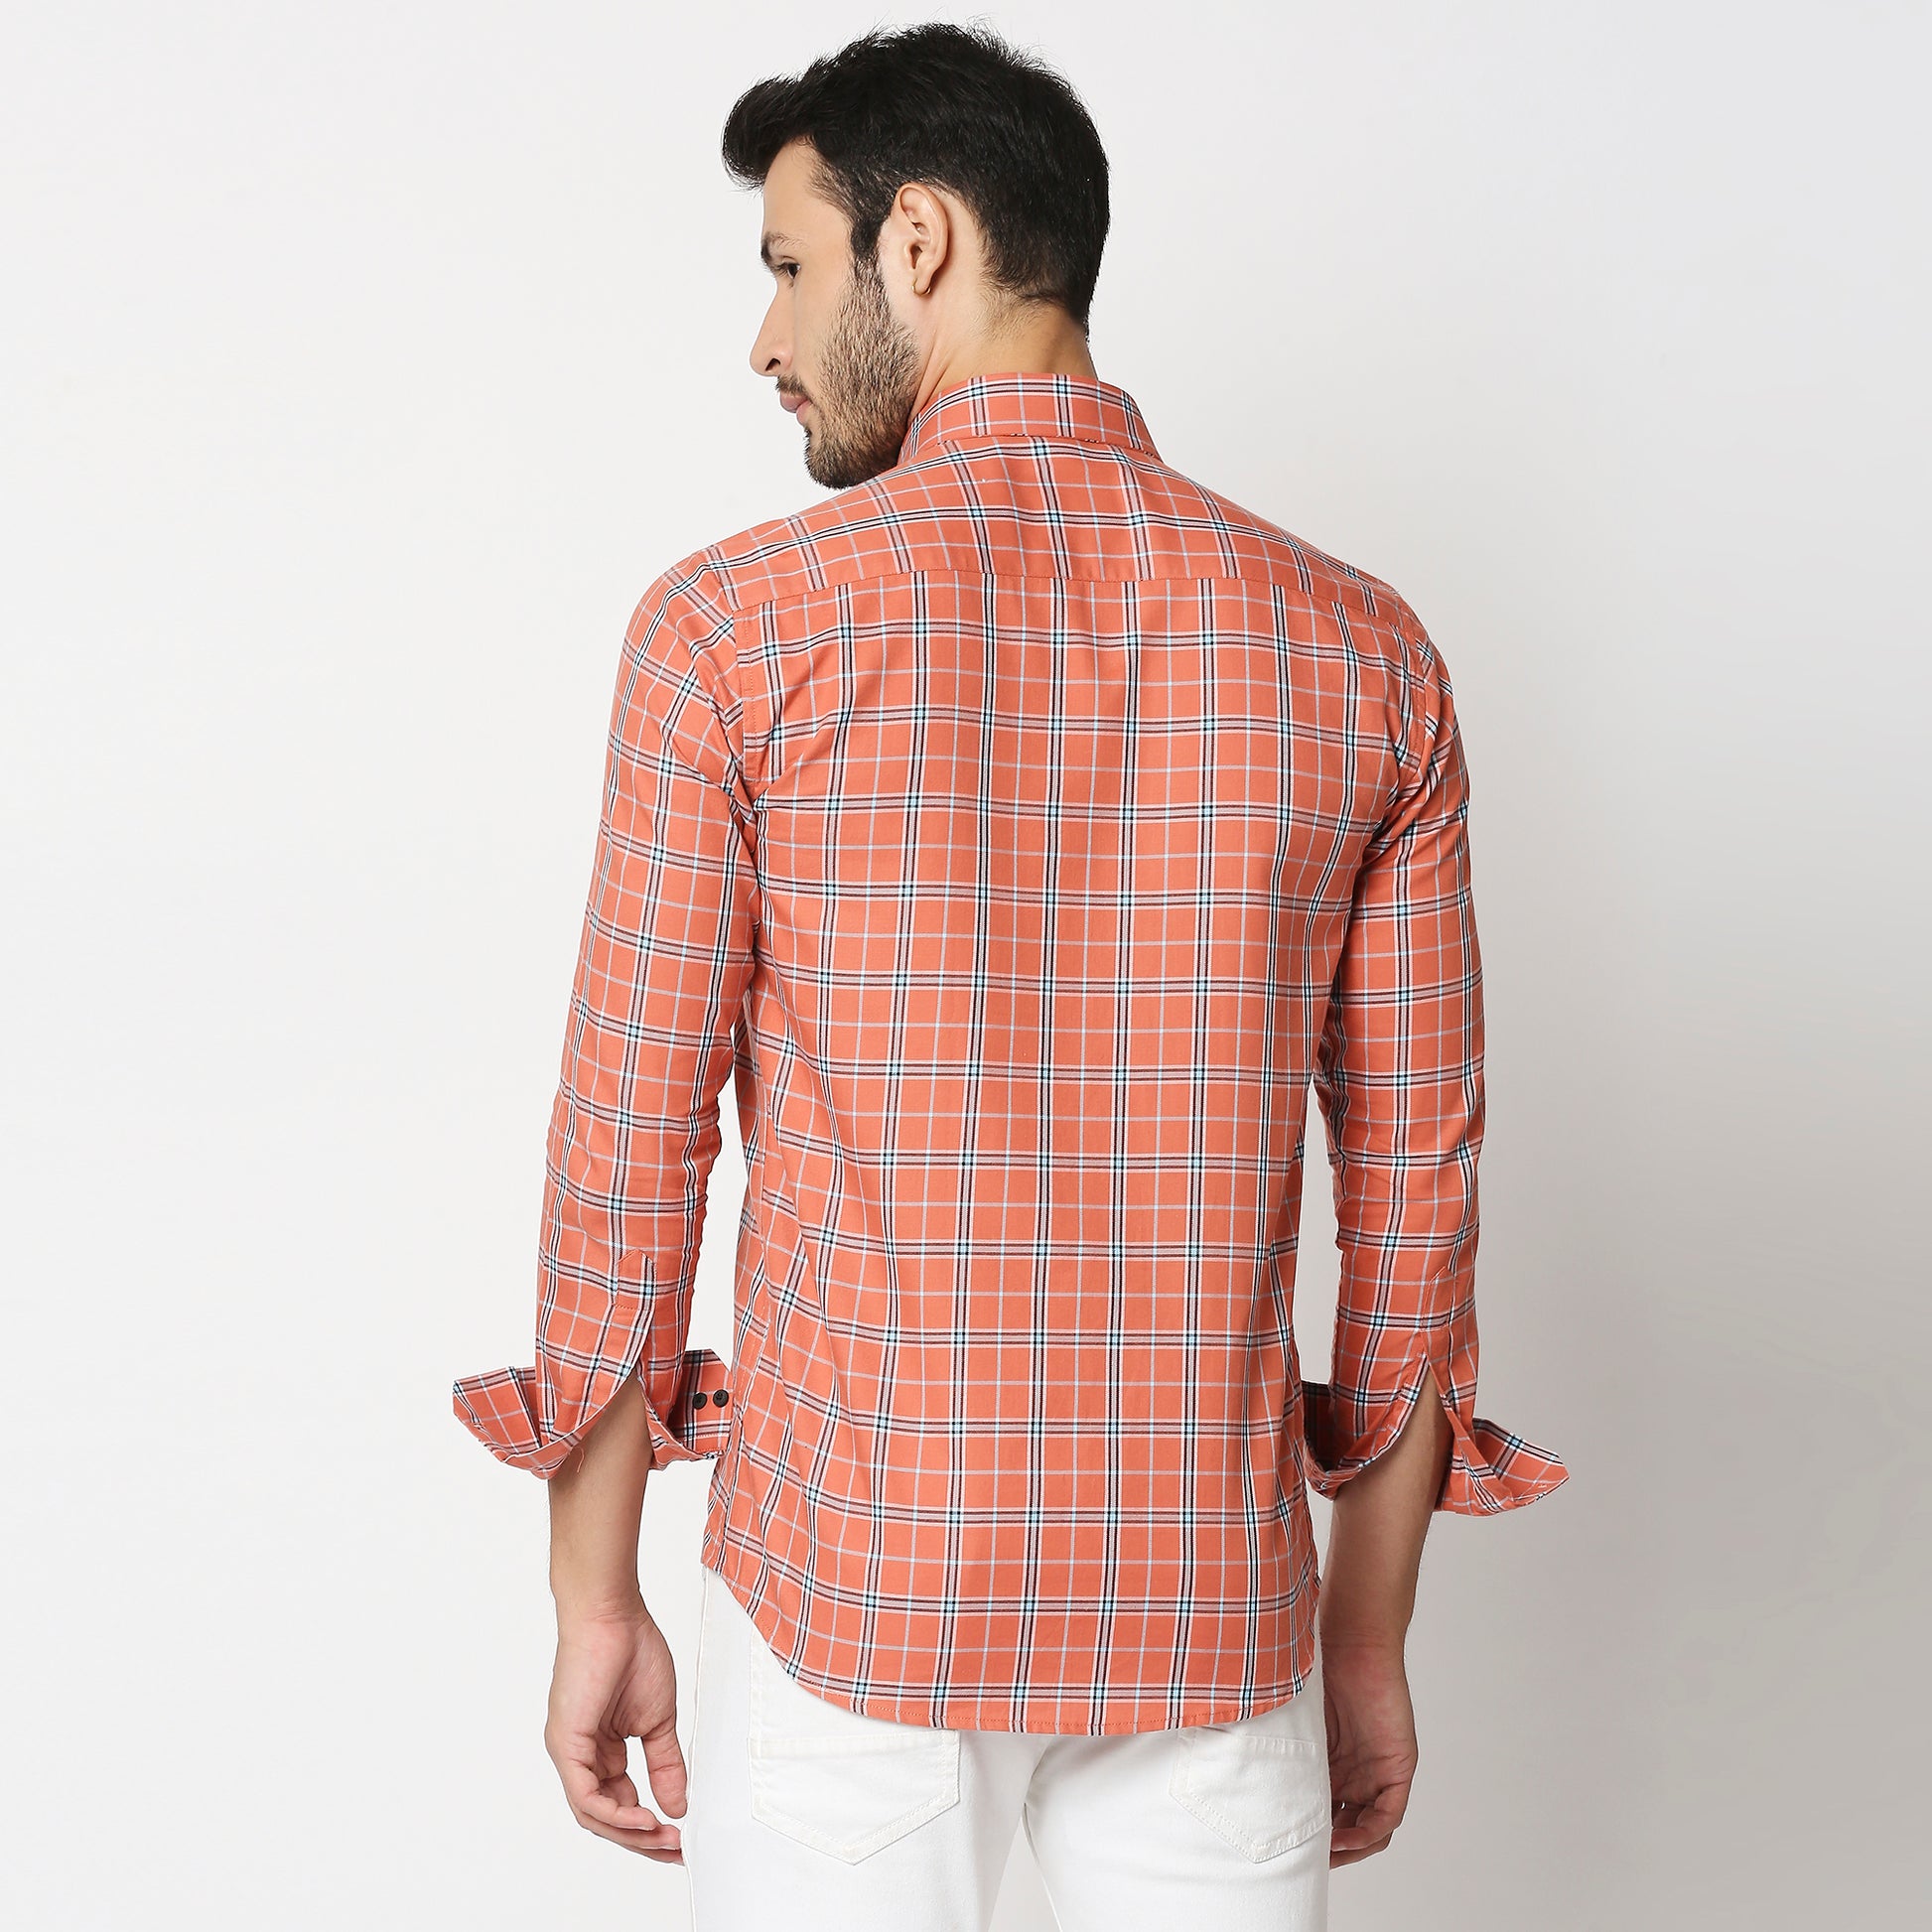 Fostino Orange Checks Full Sleeves Shirt - Fostino Shirts